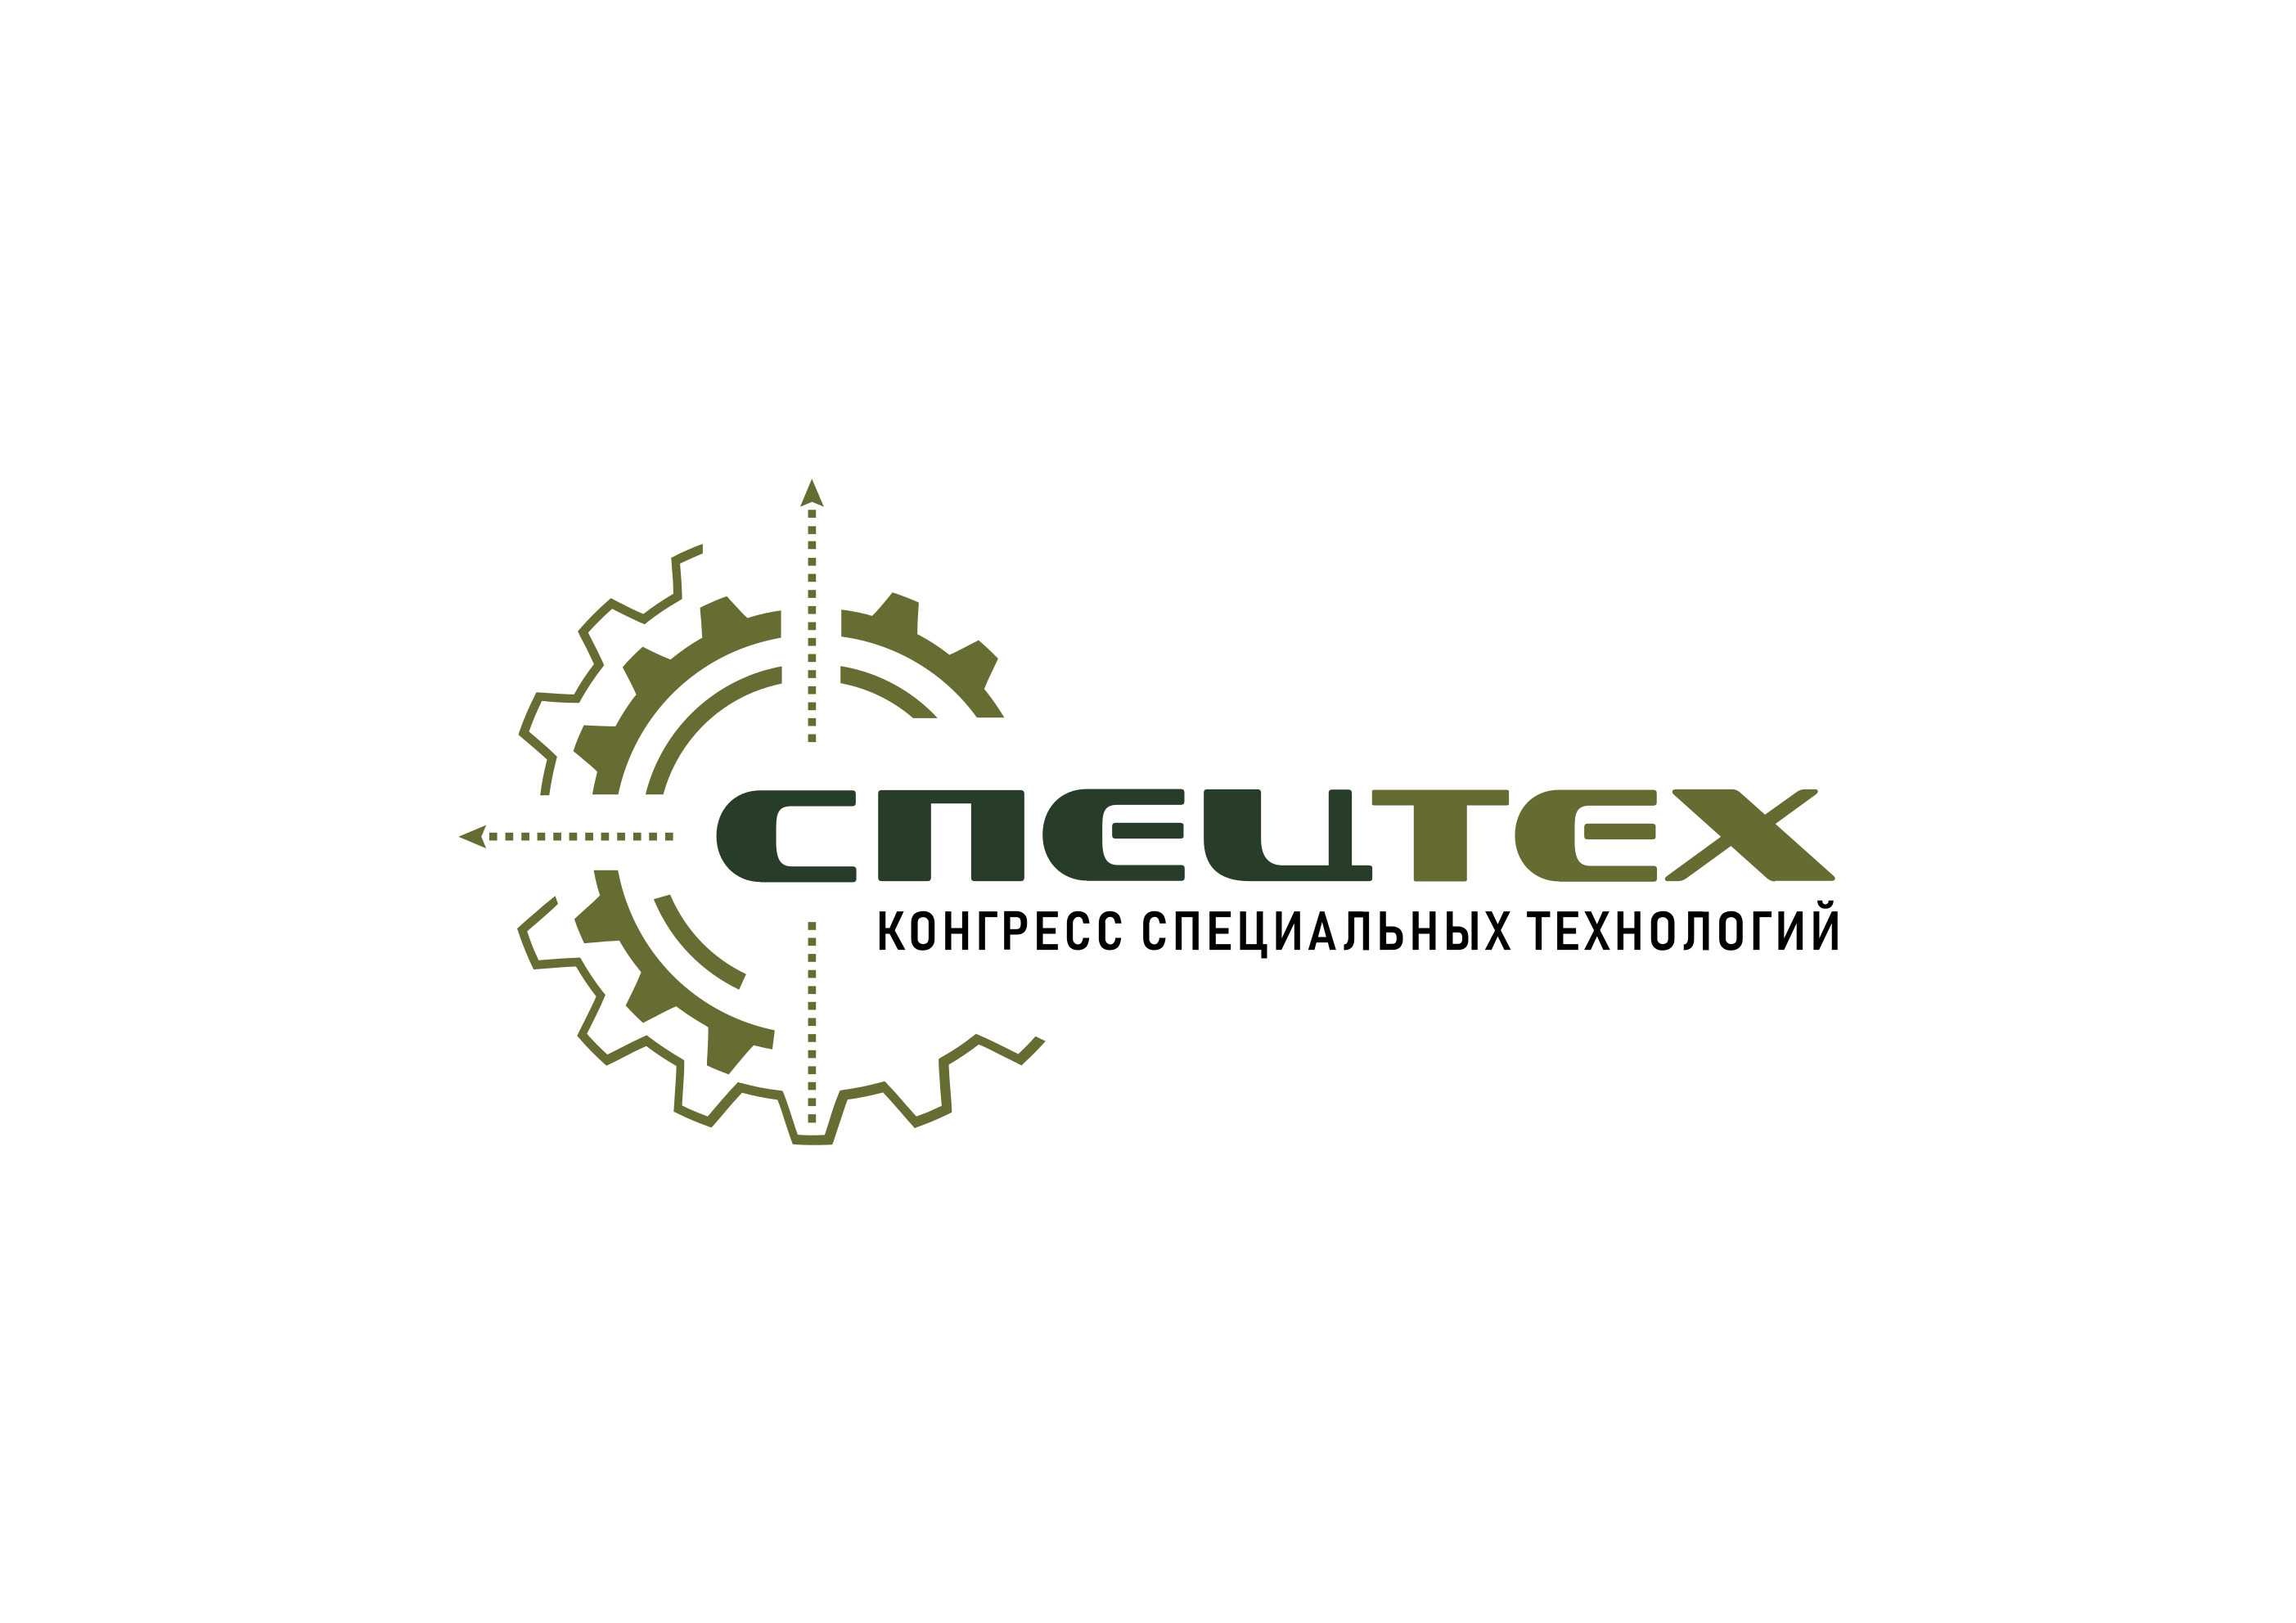 SPECTEX color logo